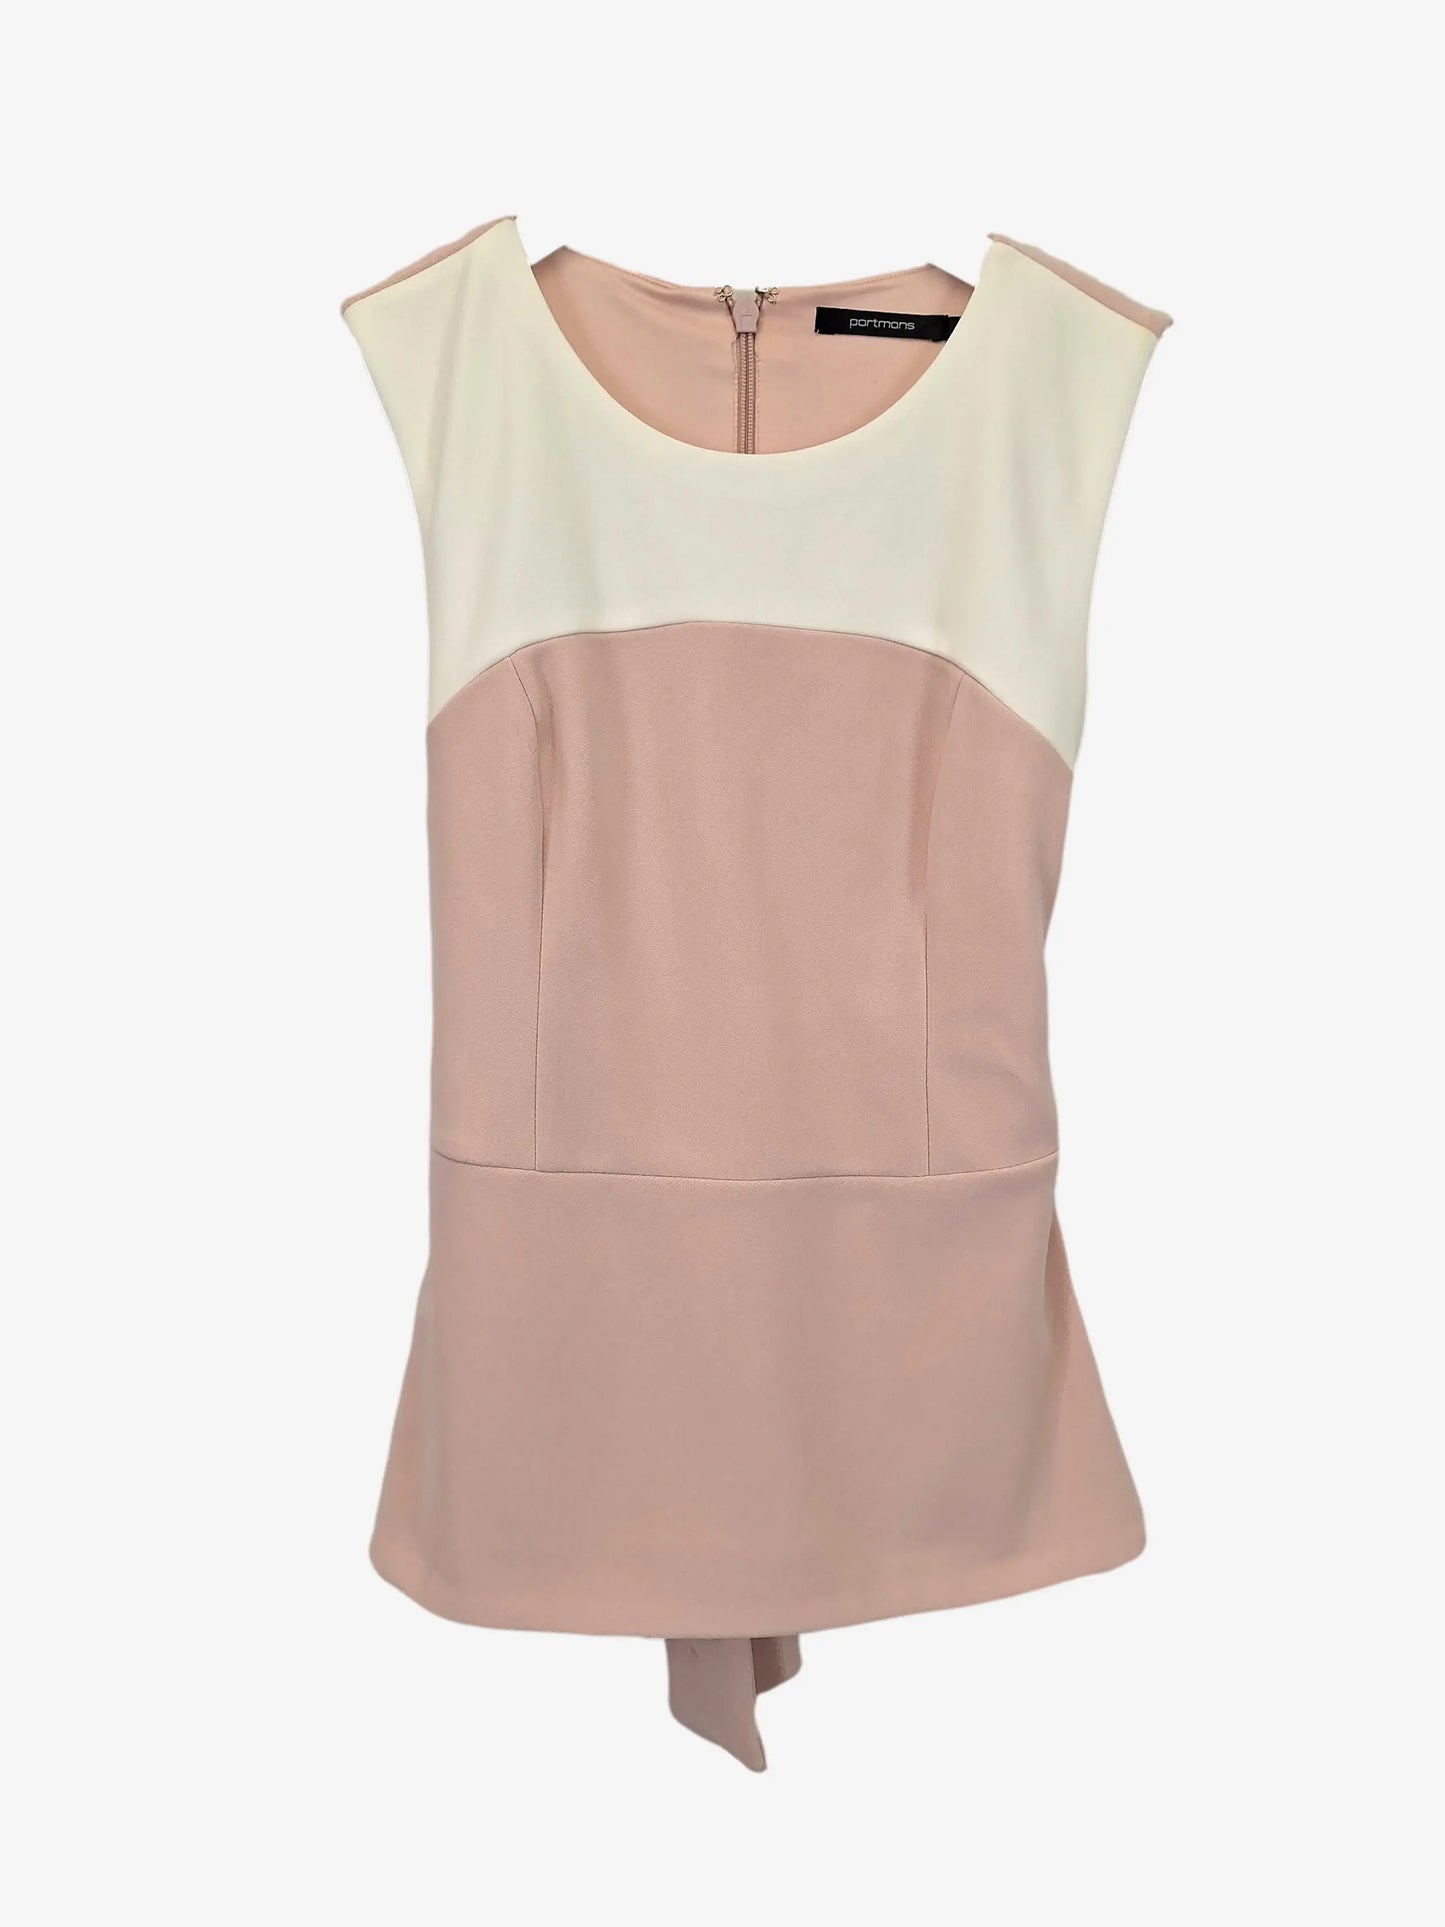 Portmans Blush & Cream Tie Back Top Size S by SwapUp-Online Second Hand Store-Online Thrift Store